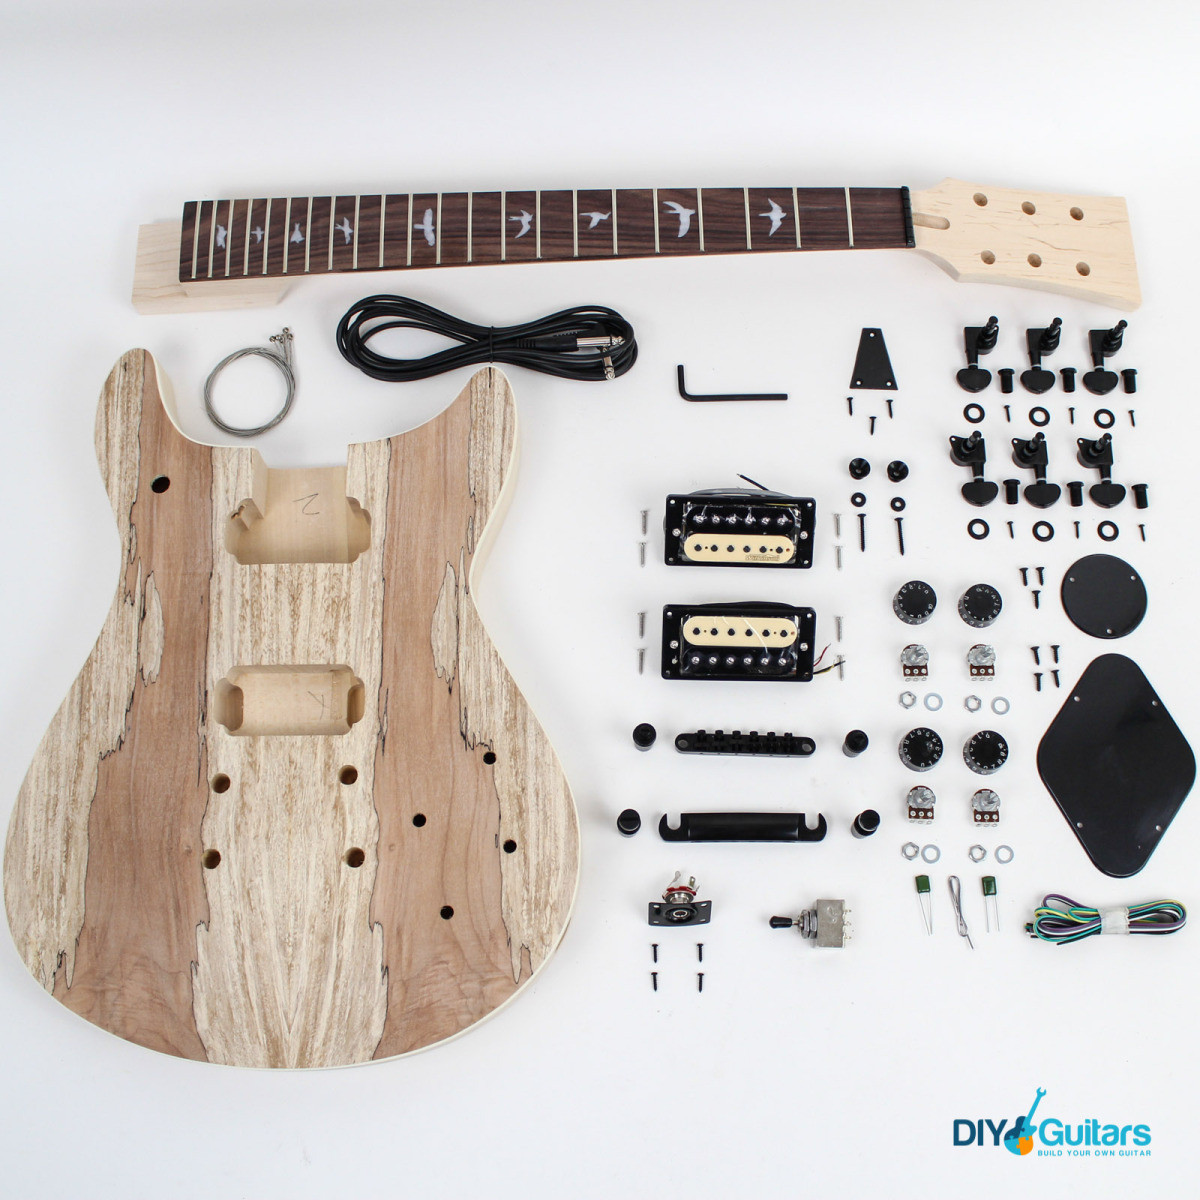 Best ideas about Guitar Kits DIY
. Save or Pin USA Special Guitar Kit DIY Guitars Now.